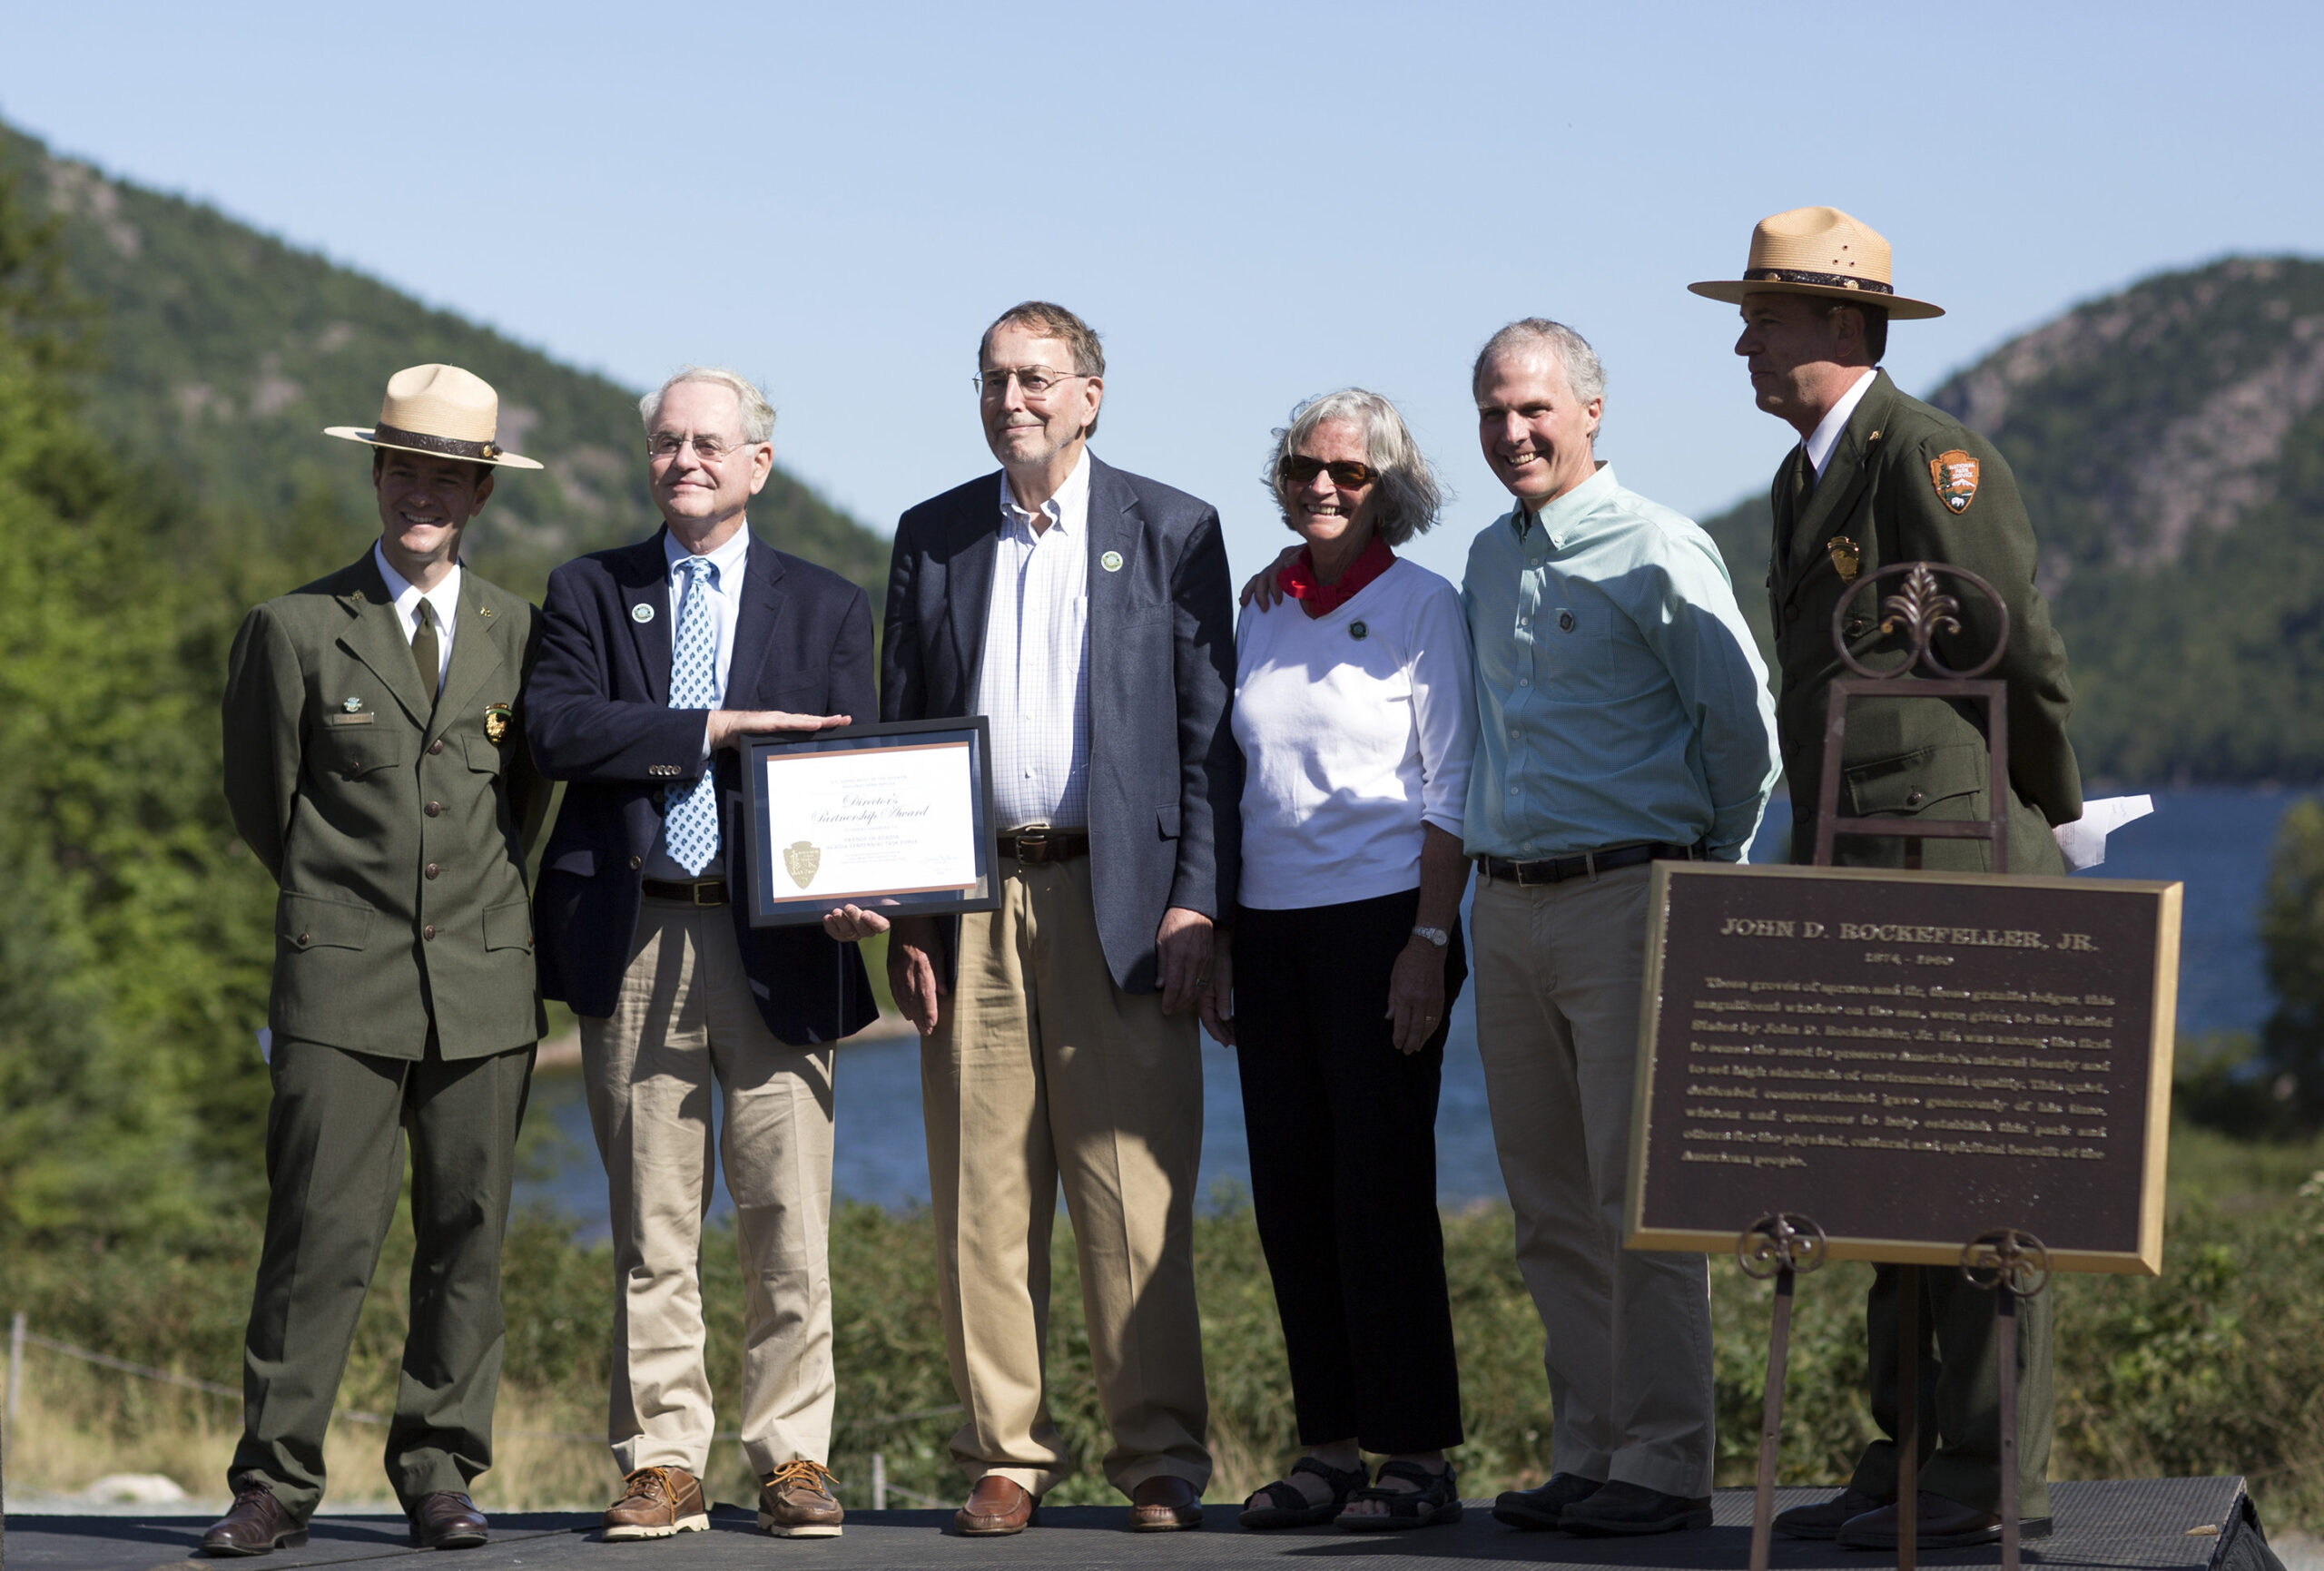 Acadia Centennial Task Force and Friends of Acadia Receive National Park Service Partnership Award